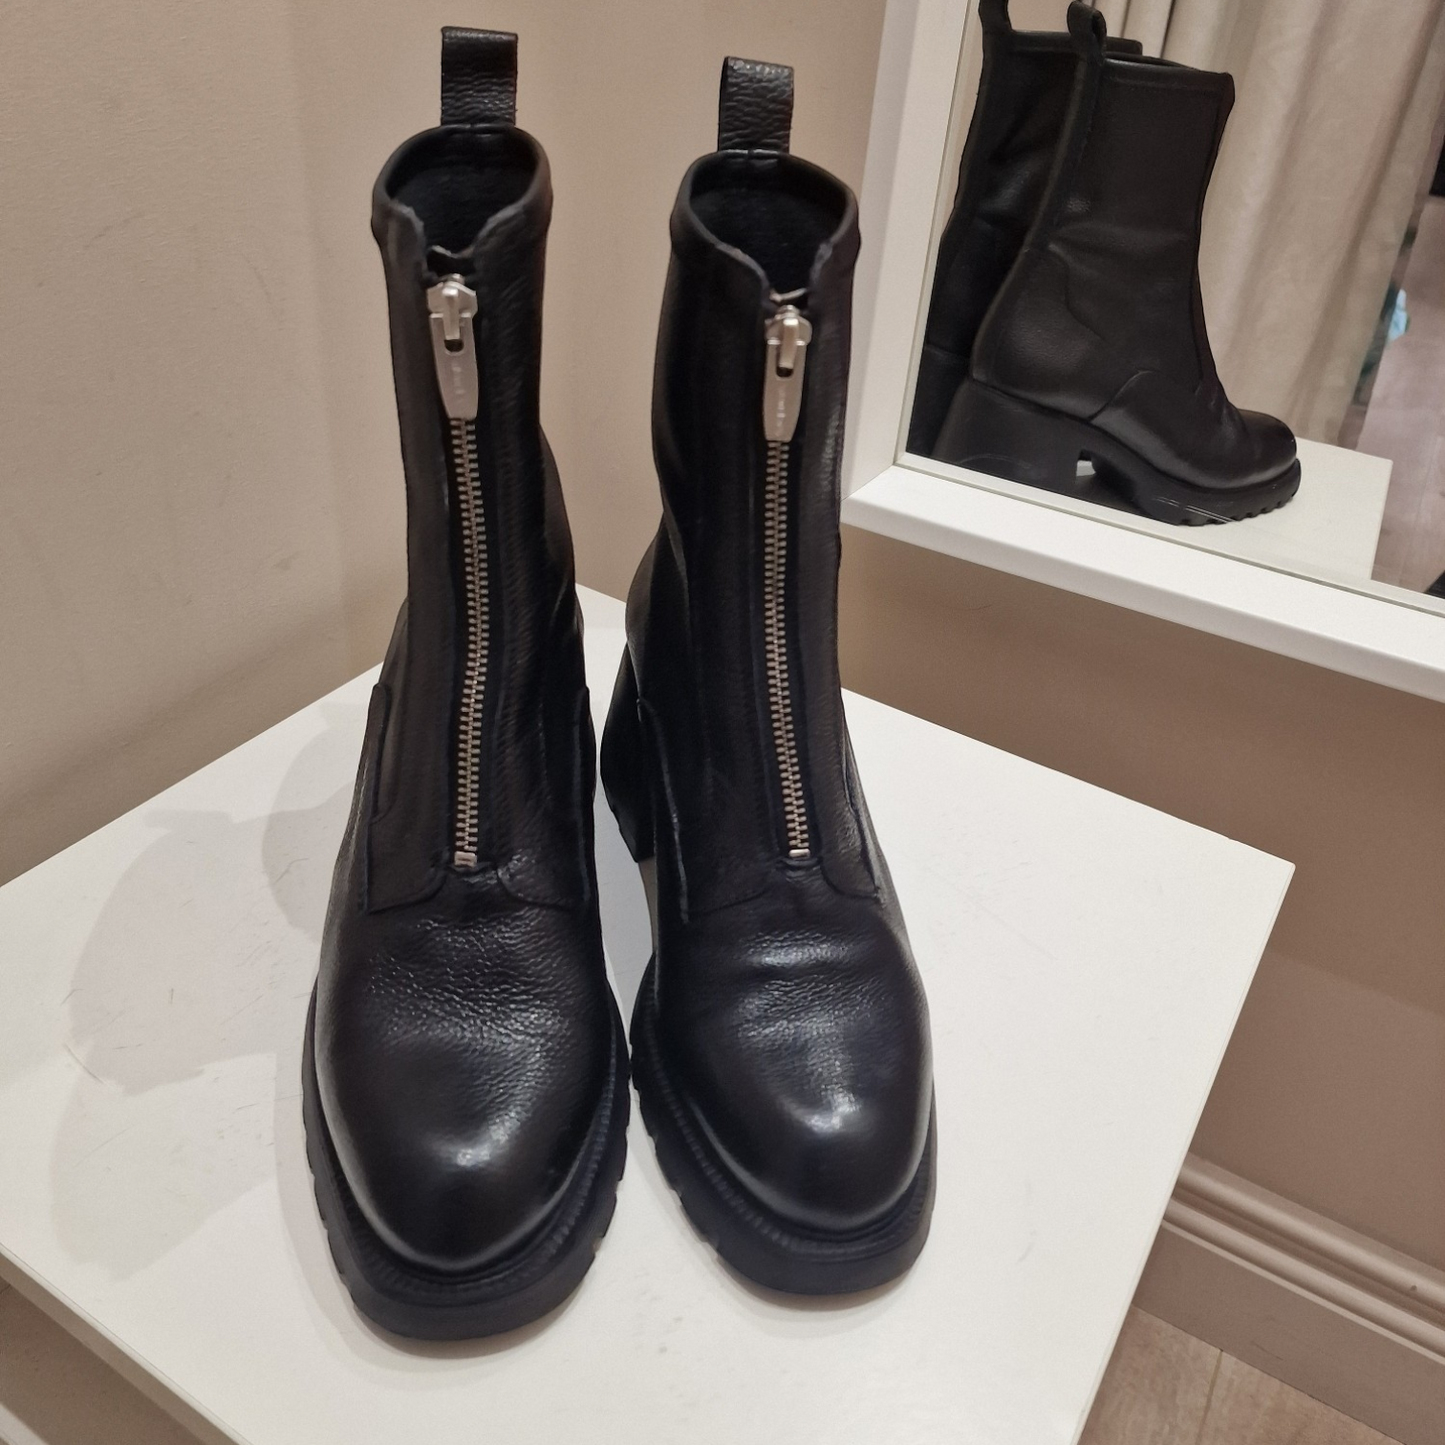 Wonder Black boots, size 5, new